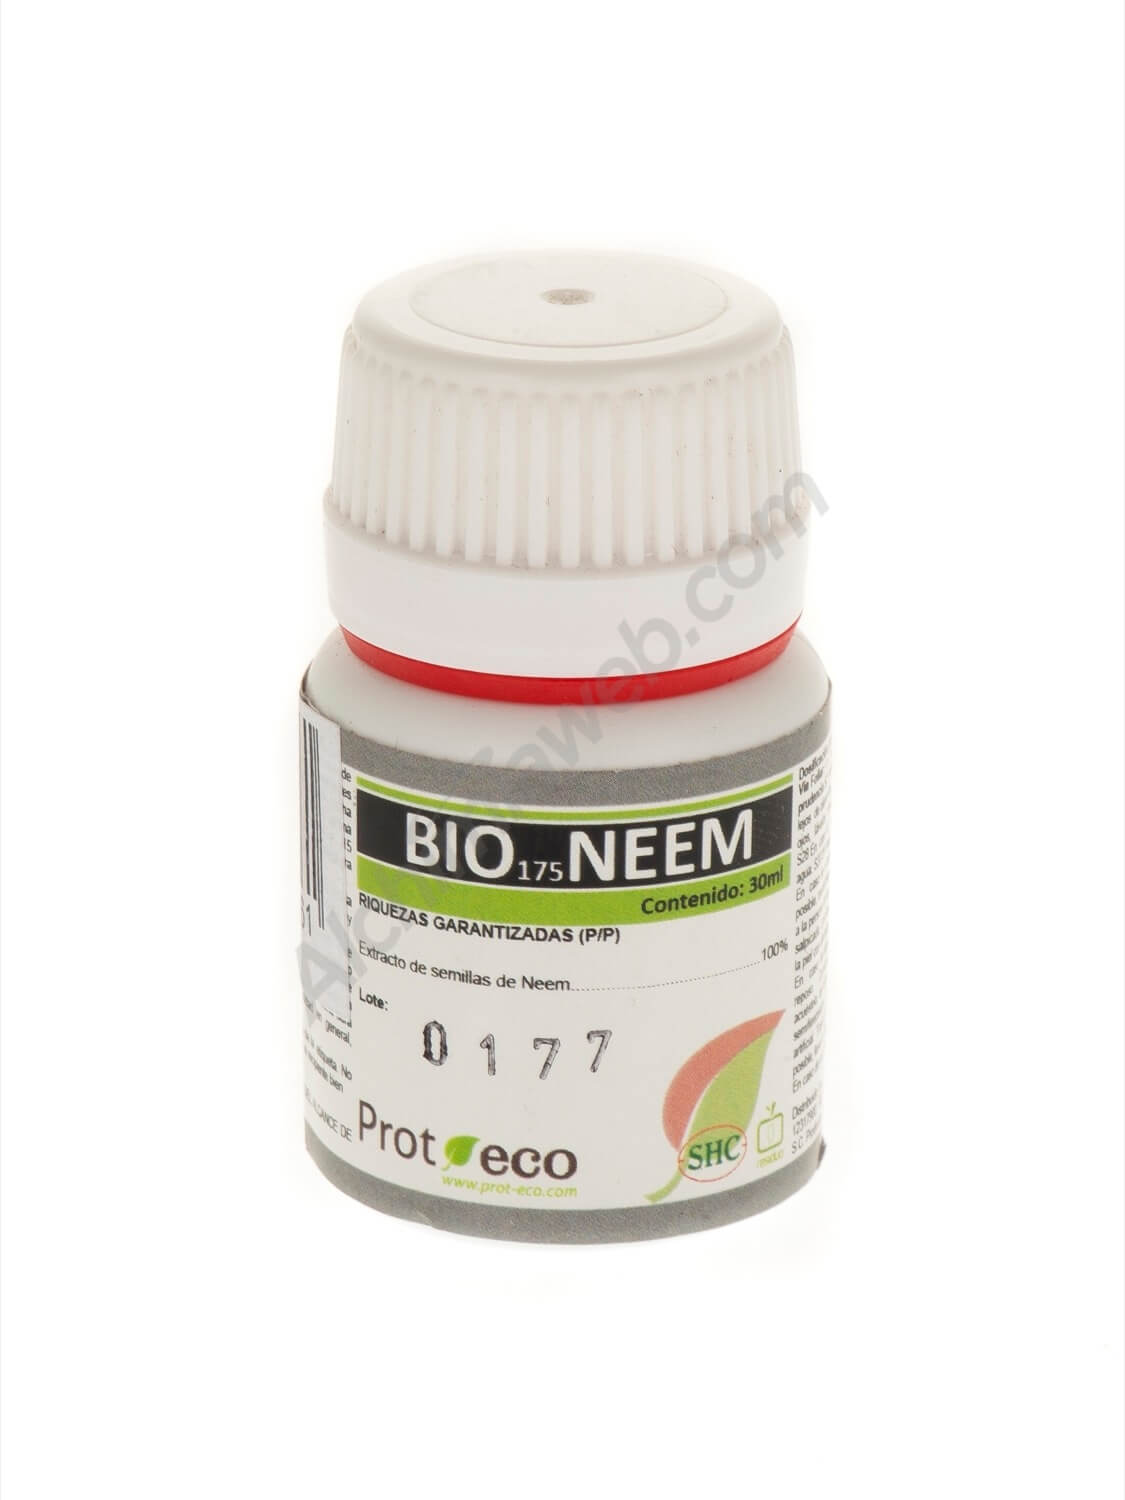 Vente de huile de Neem, BioNeem